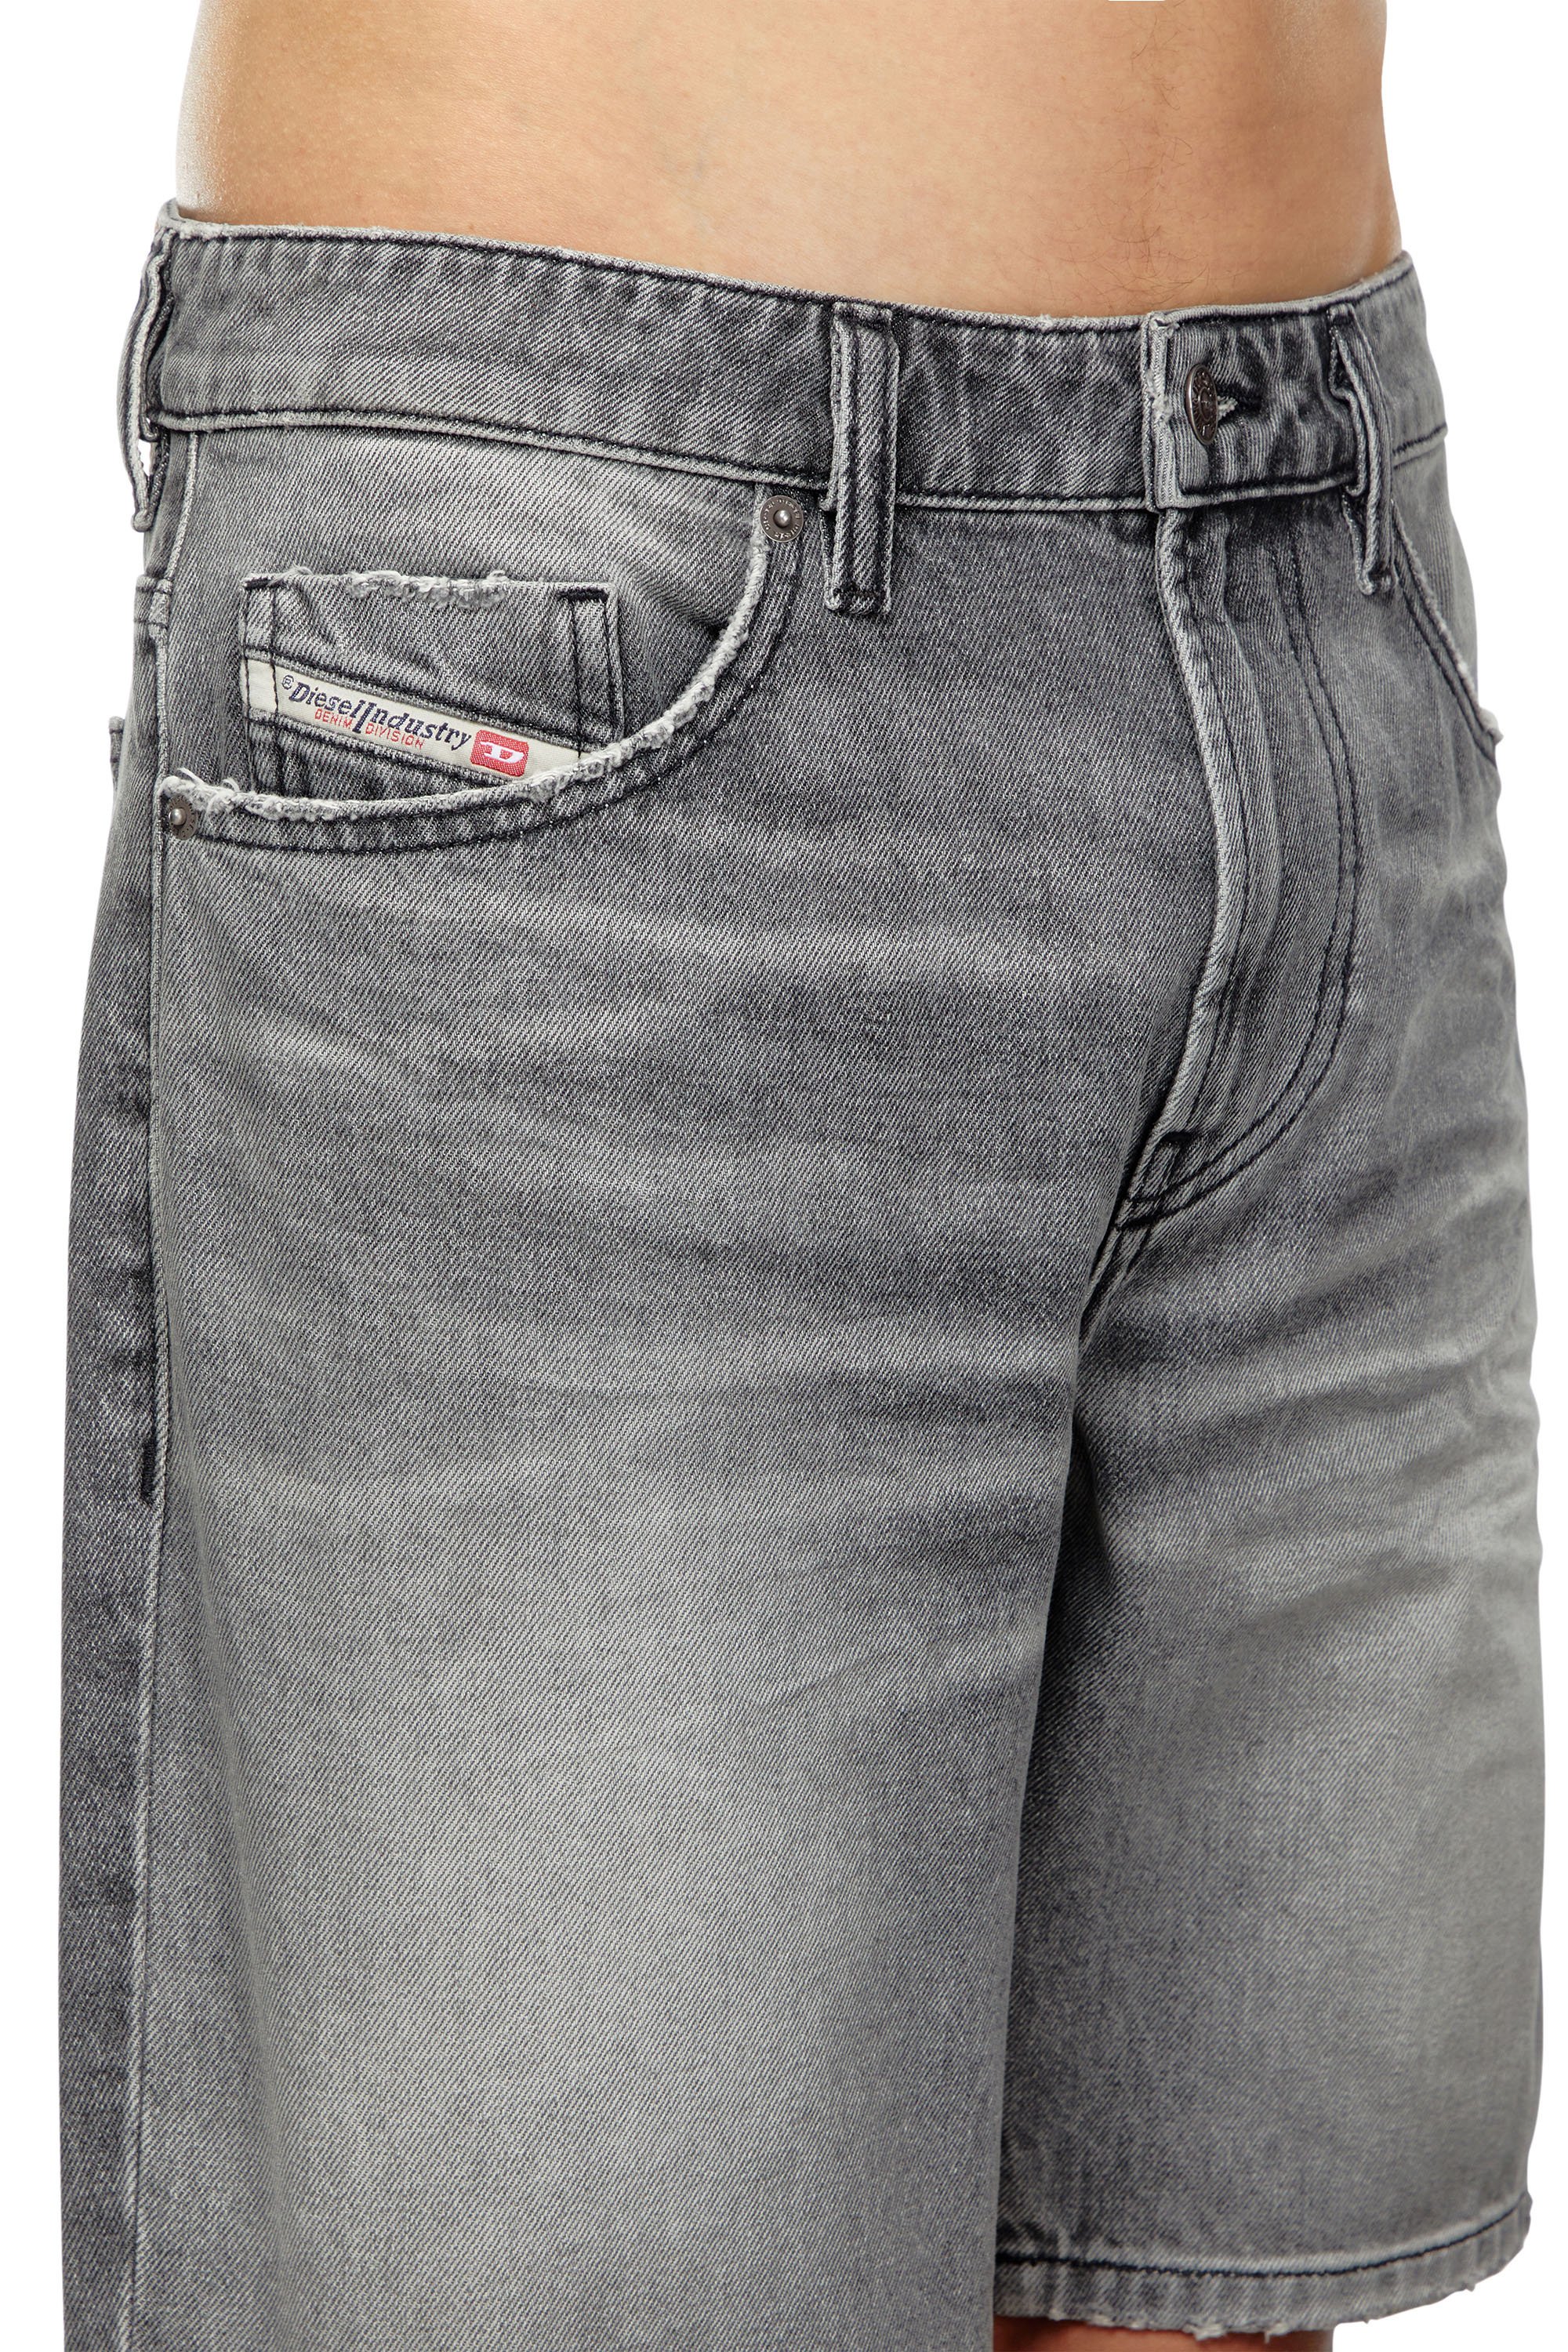 Diesel - D-FIN, Man Slim denim shorts in Grey - Image 5